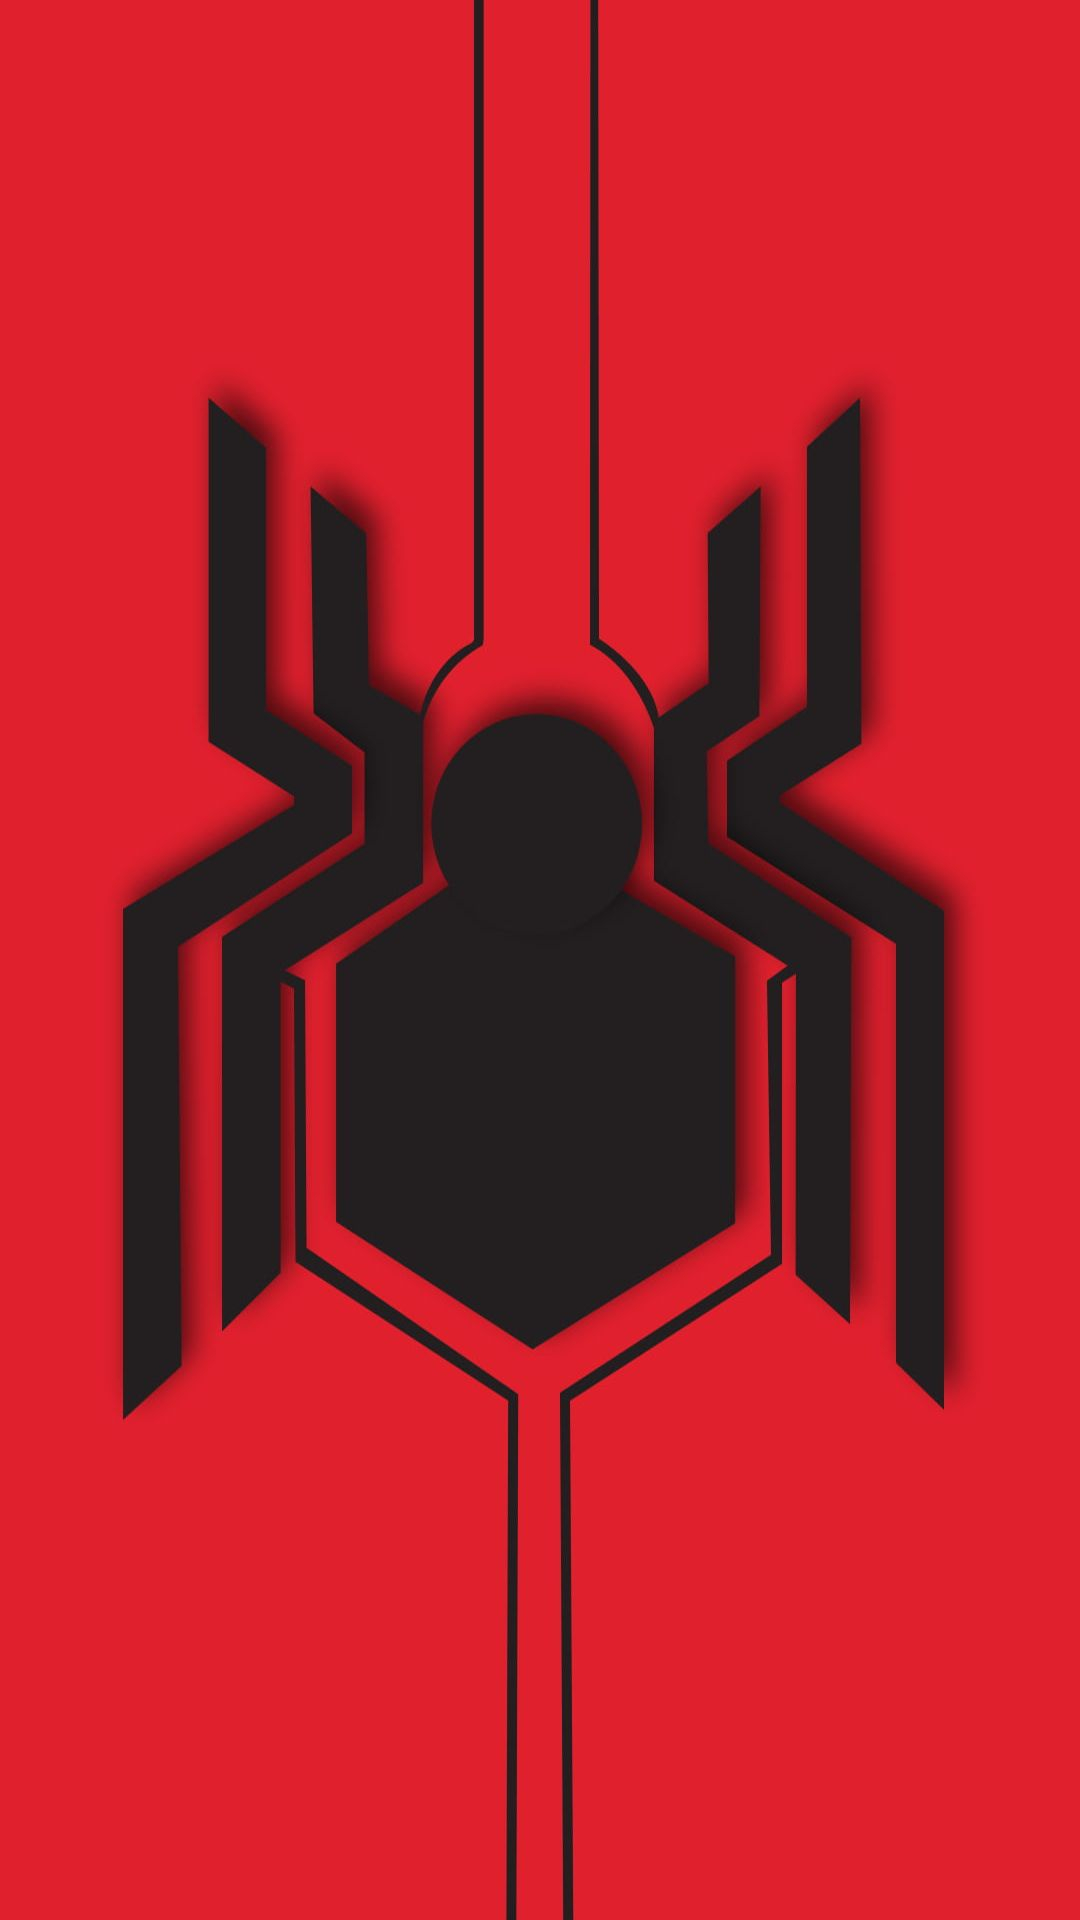 1080x1920 Spider Man Logo Wallpaper- Top Best Quality Spider Man Logo Backgrounds (HD,4k